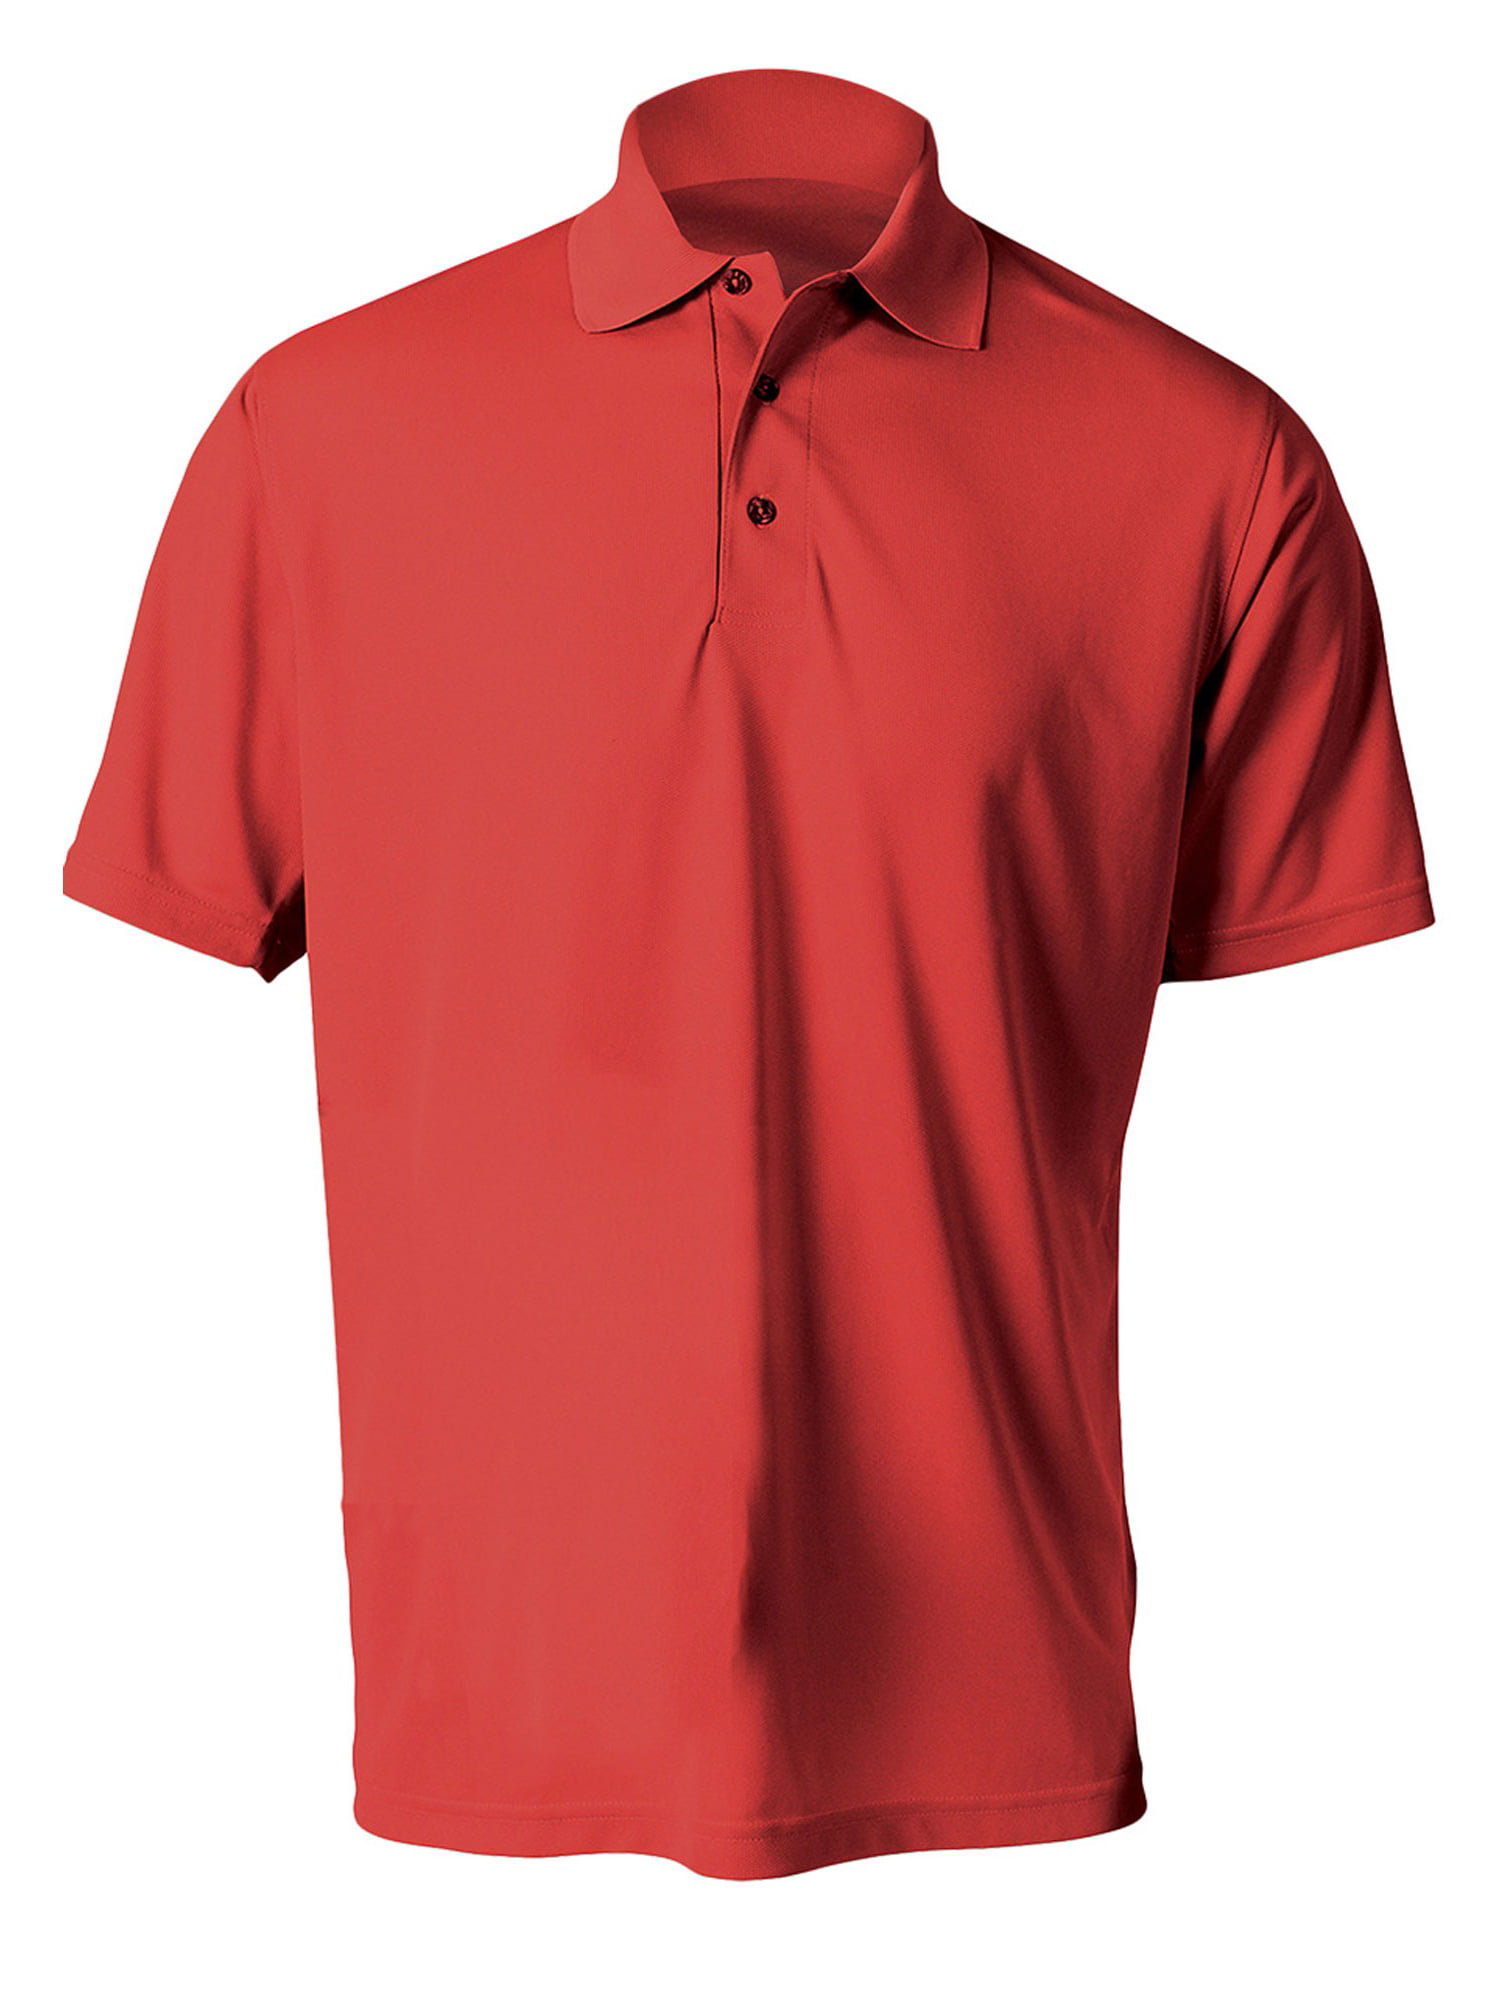 Paragon Men\'s Anti Microbial 30 Protection Style Upf 100 Shirt, Polo